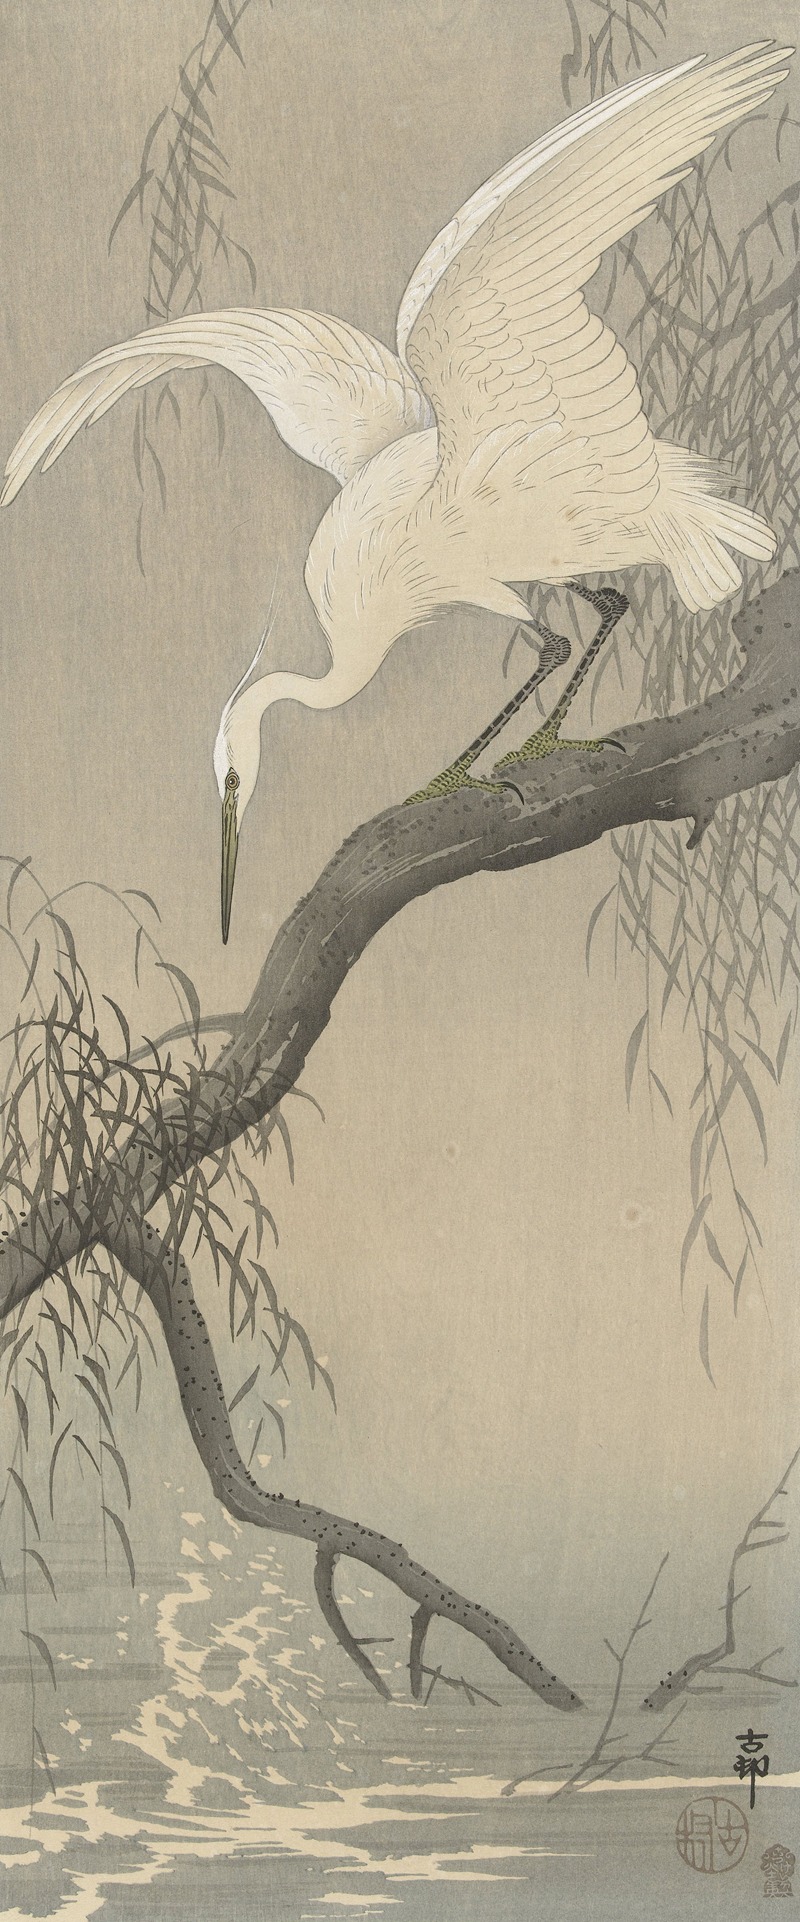 Ohara Koson - White heron on tree branch